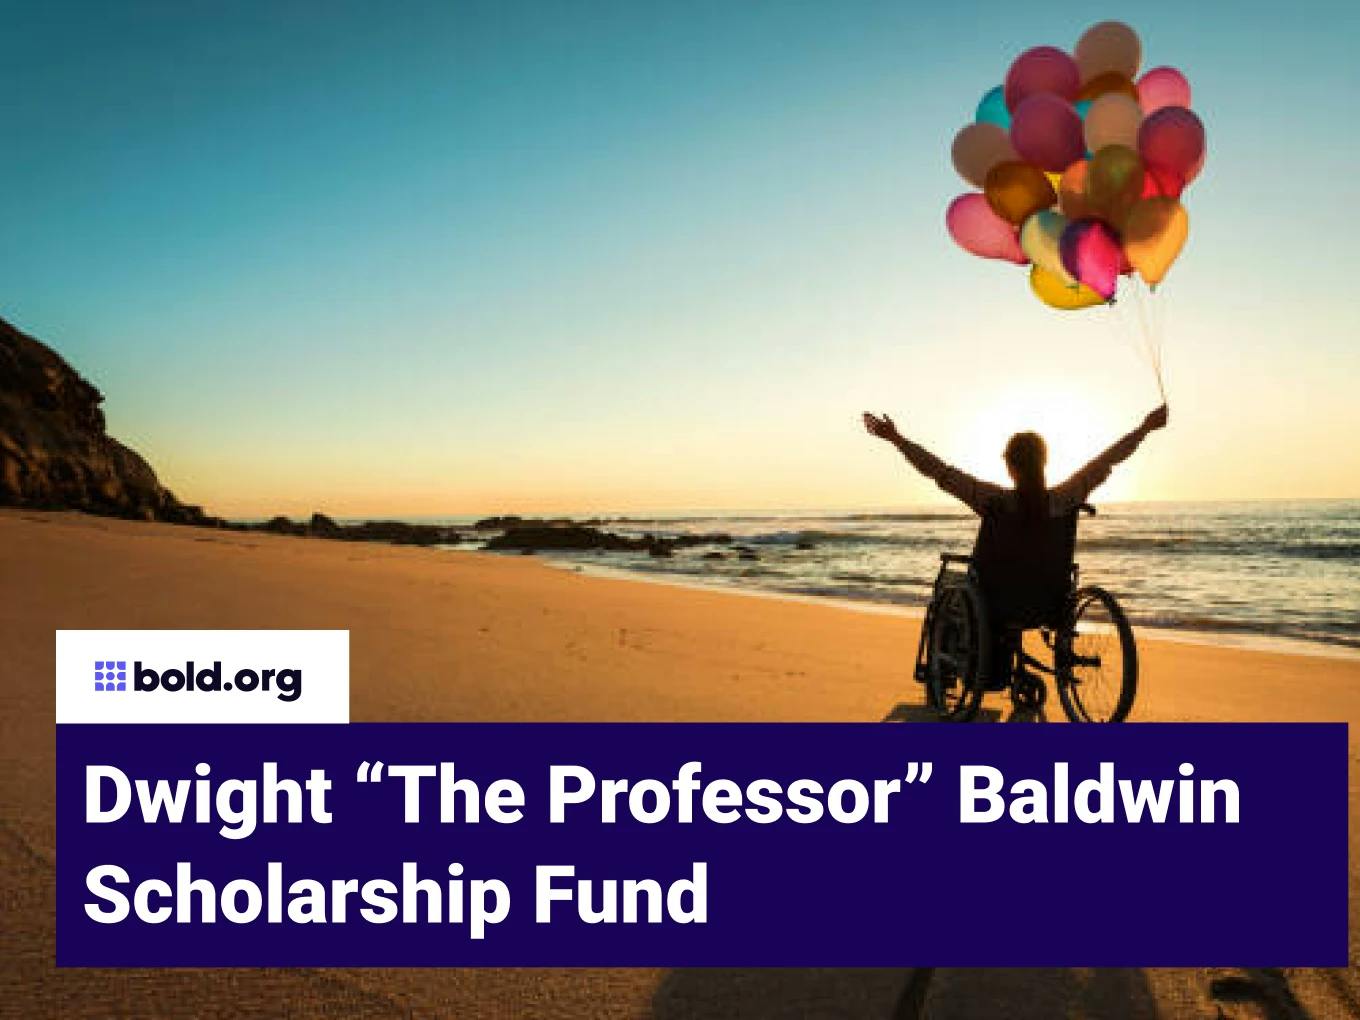 Dwight Baldwin "The Professor" Scholarship Fund